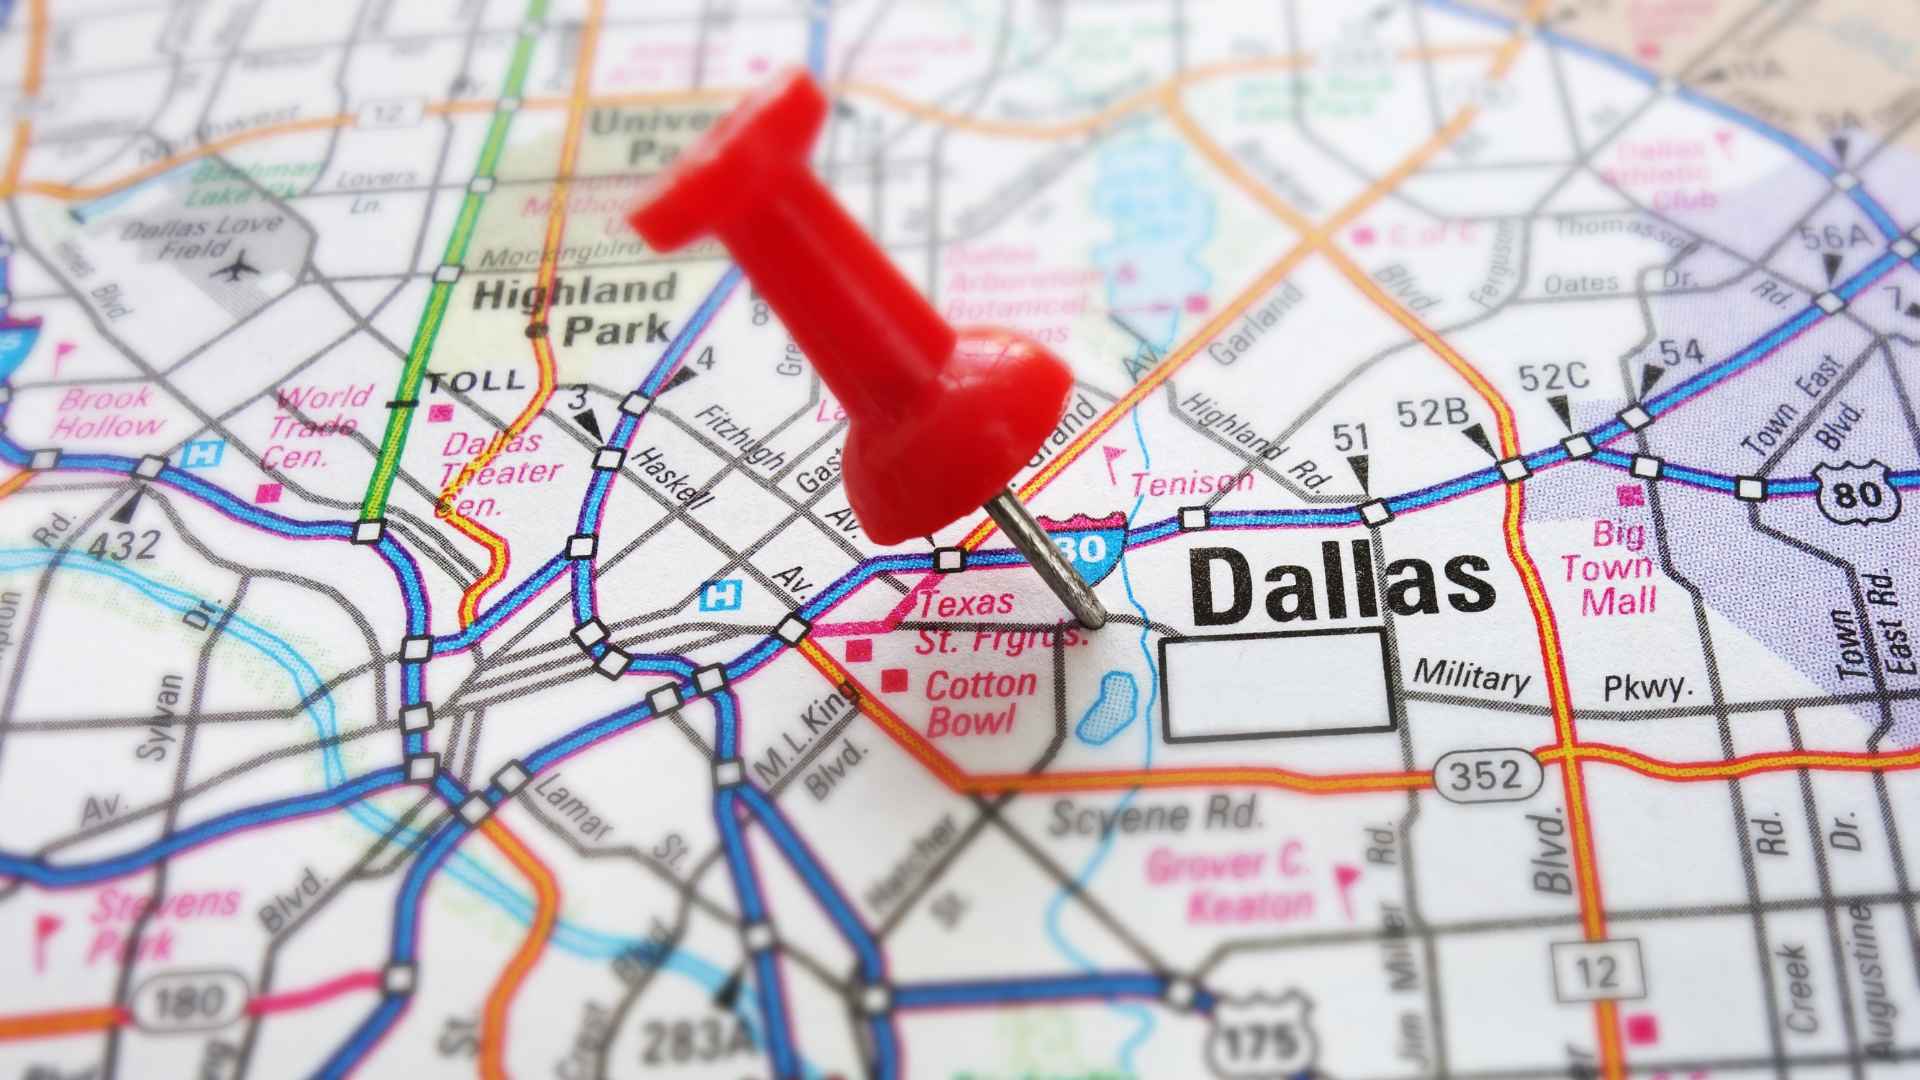 Final Mile Direct Distribution Case Study for Dallas-Based SHipper